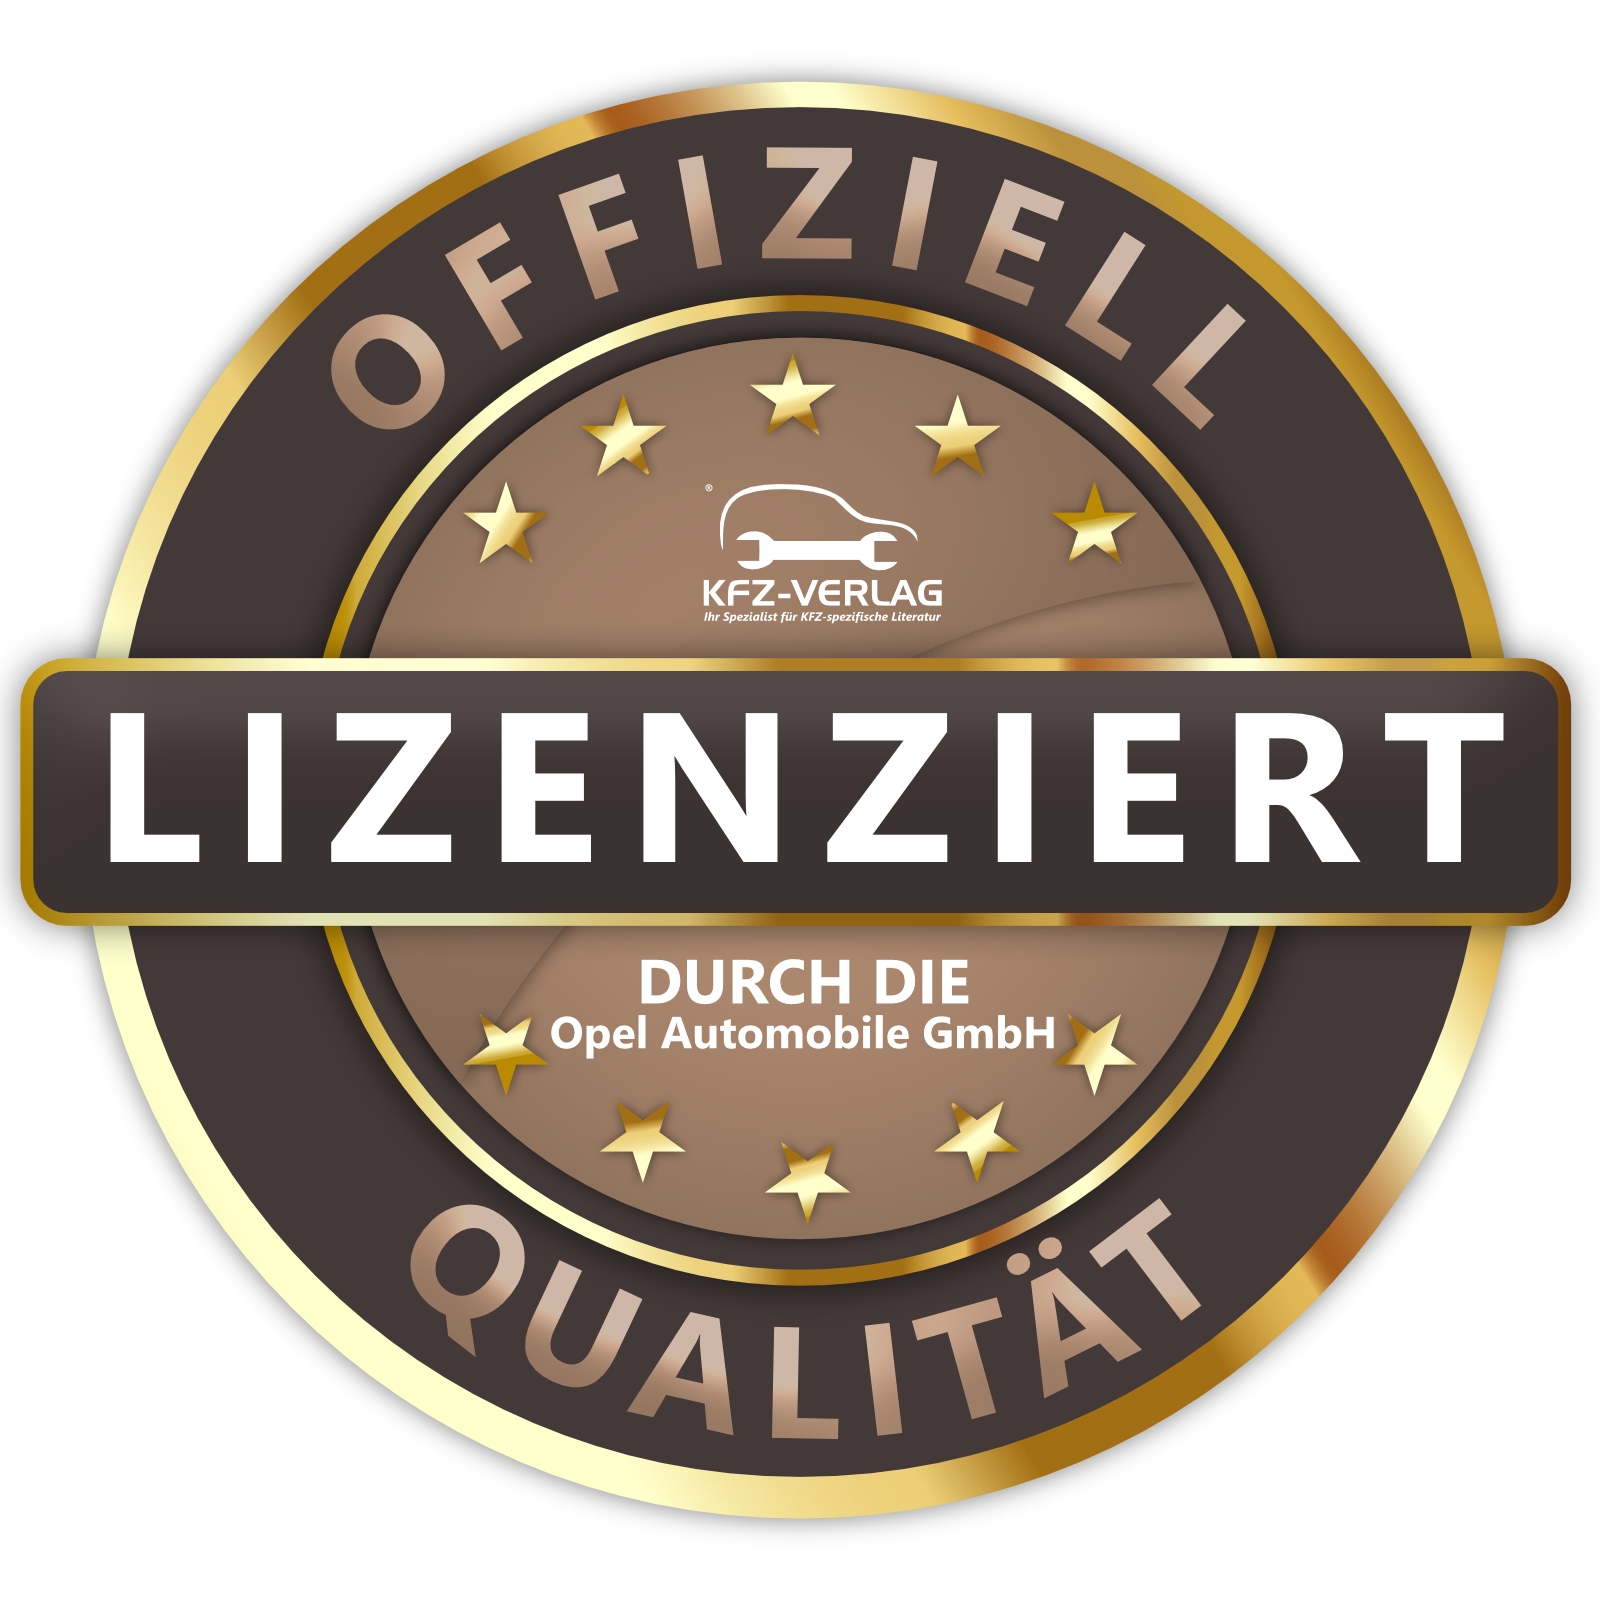 Opel Automobile GmbH